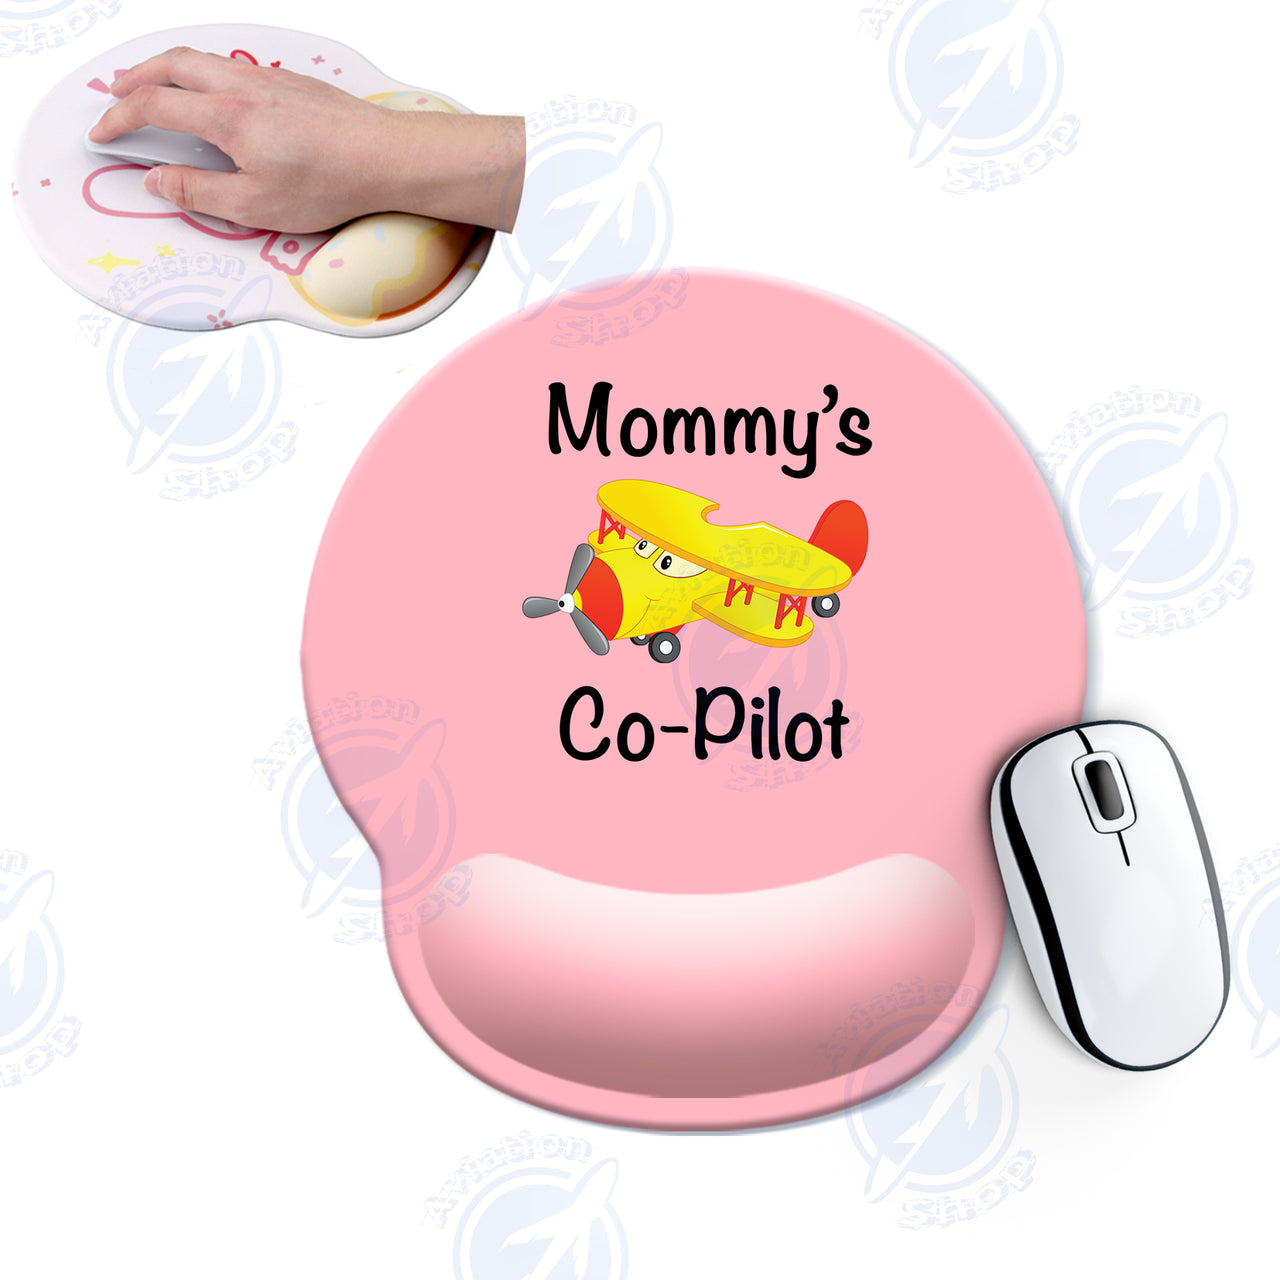 Mommy's Co-Pilot (Propeller2) Designed Ergonomic Mouse Pads